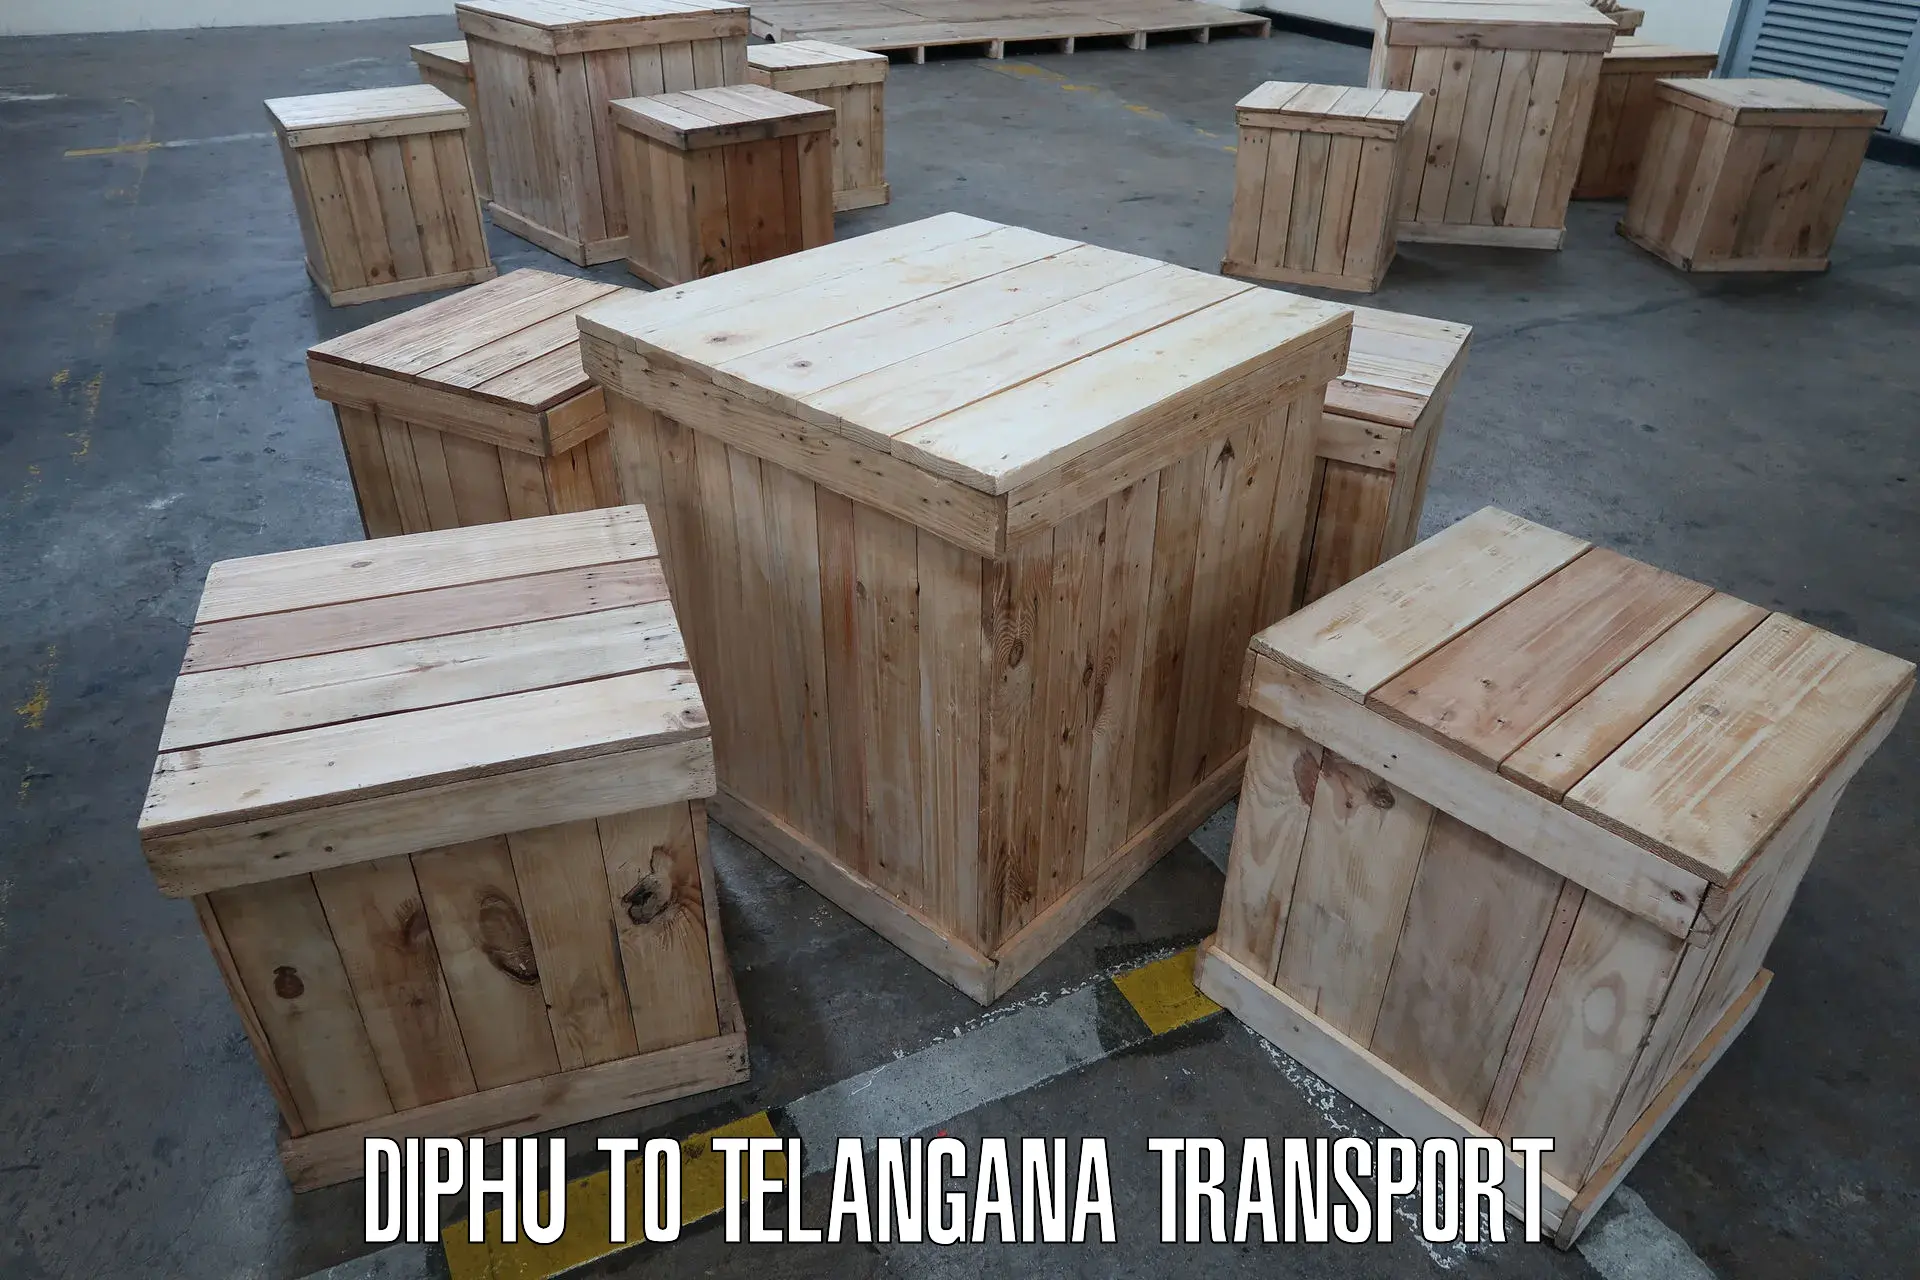 Transport in sharing Diphu to Rangareddy